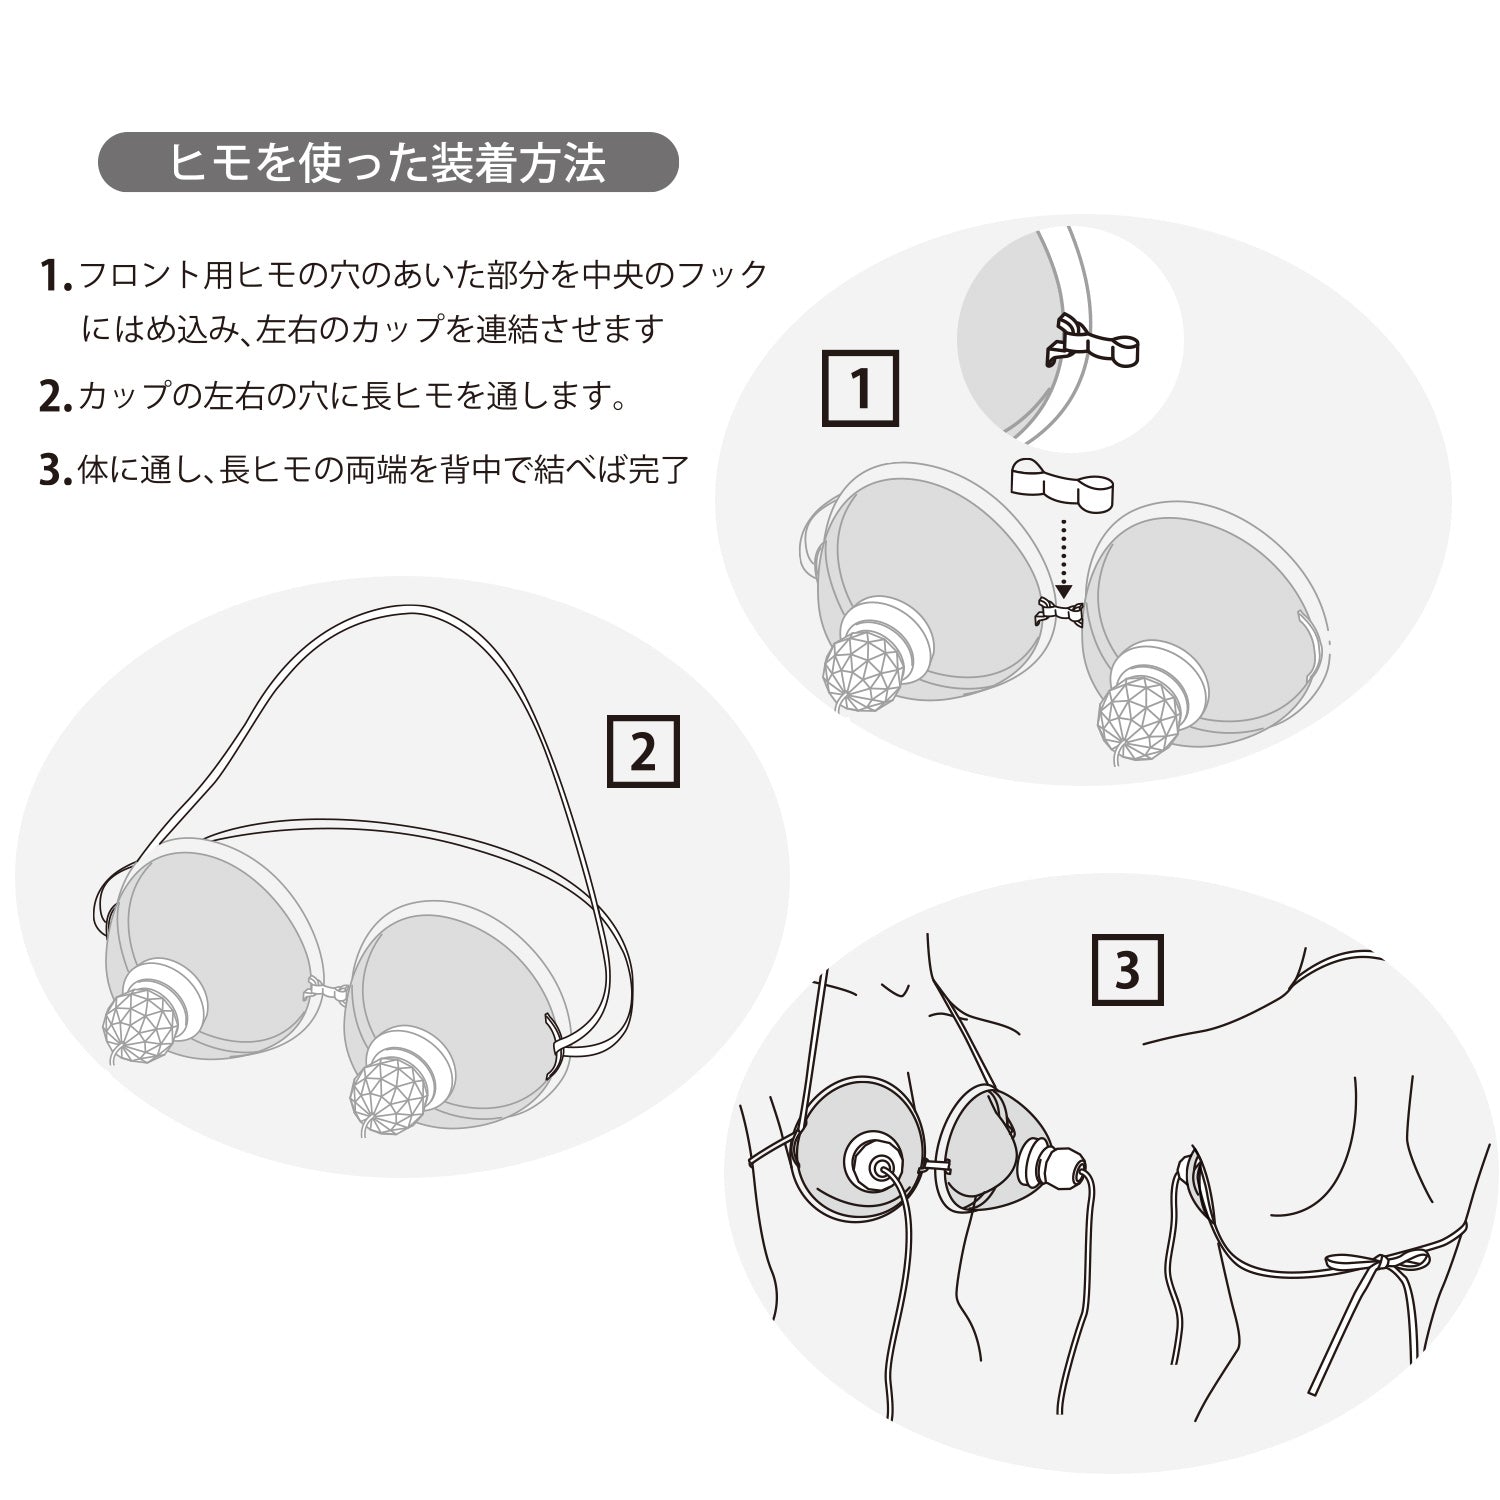 Nipple Dome Wide 乳頭旋轉刺激器